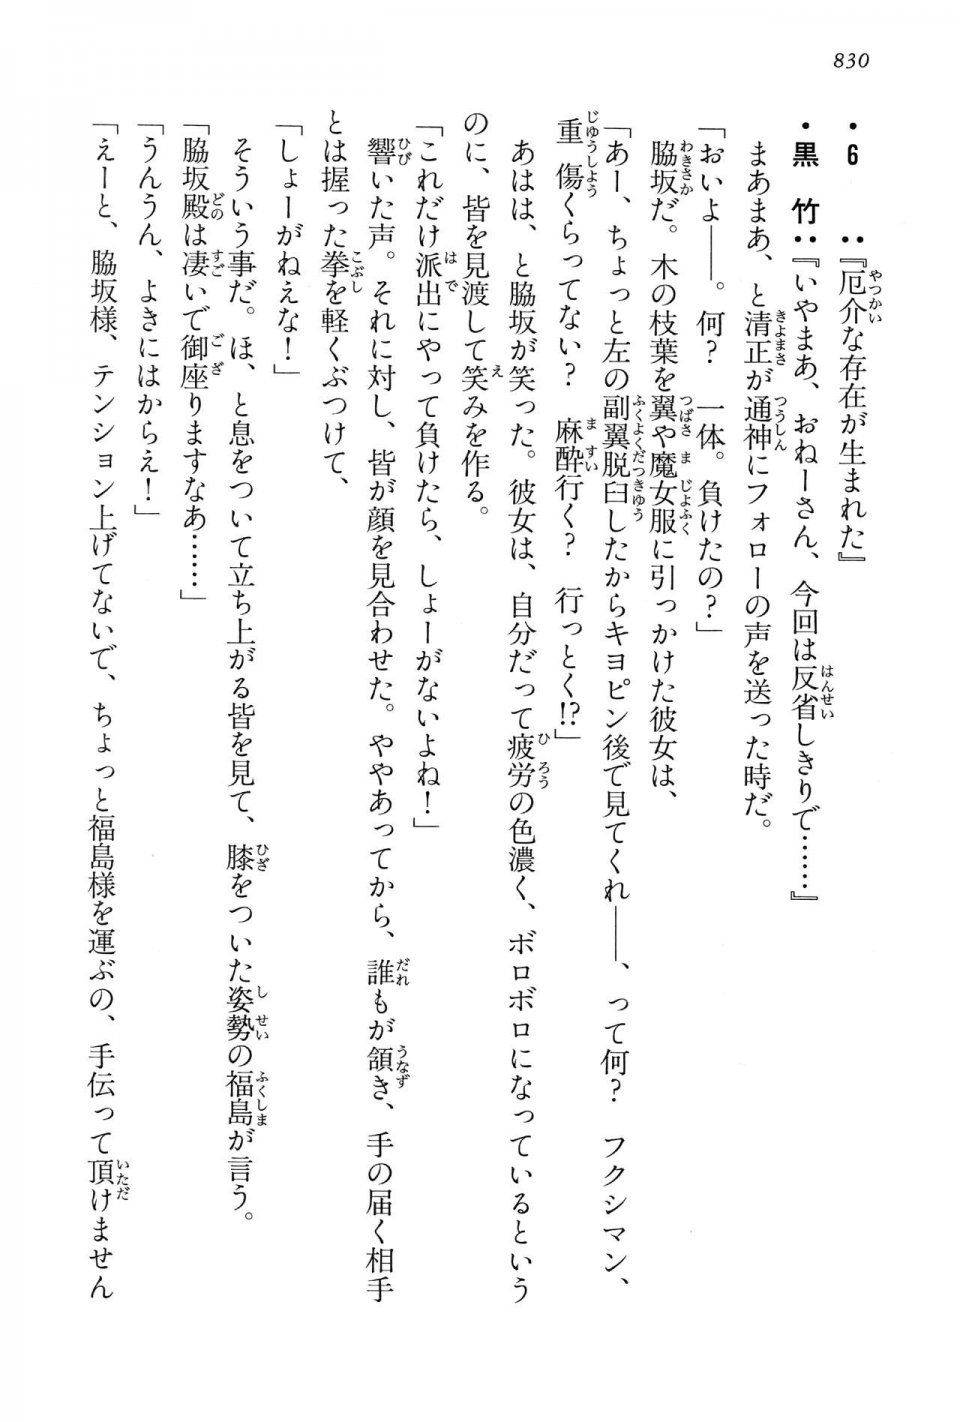 Kyoukai Senjou no Horizon LN Vol 15(6C) Part 2 - Photo #300